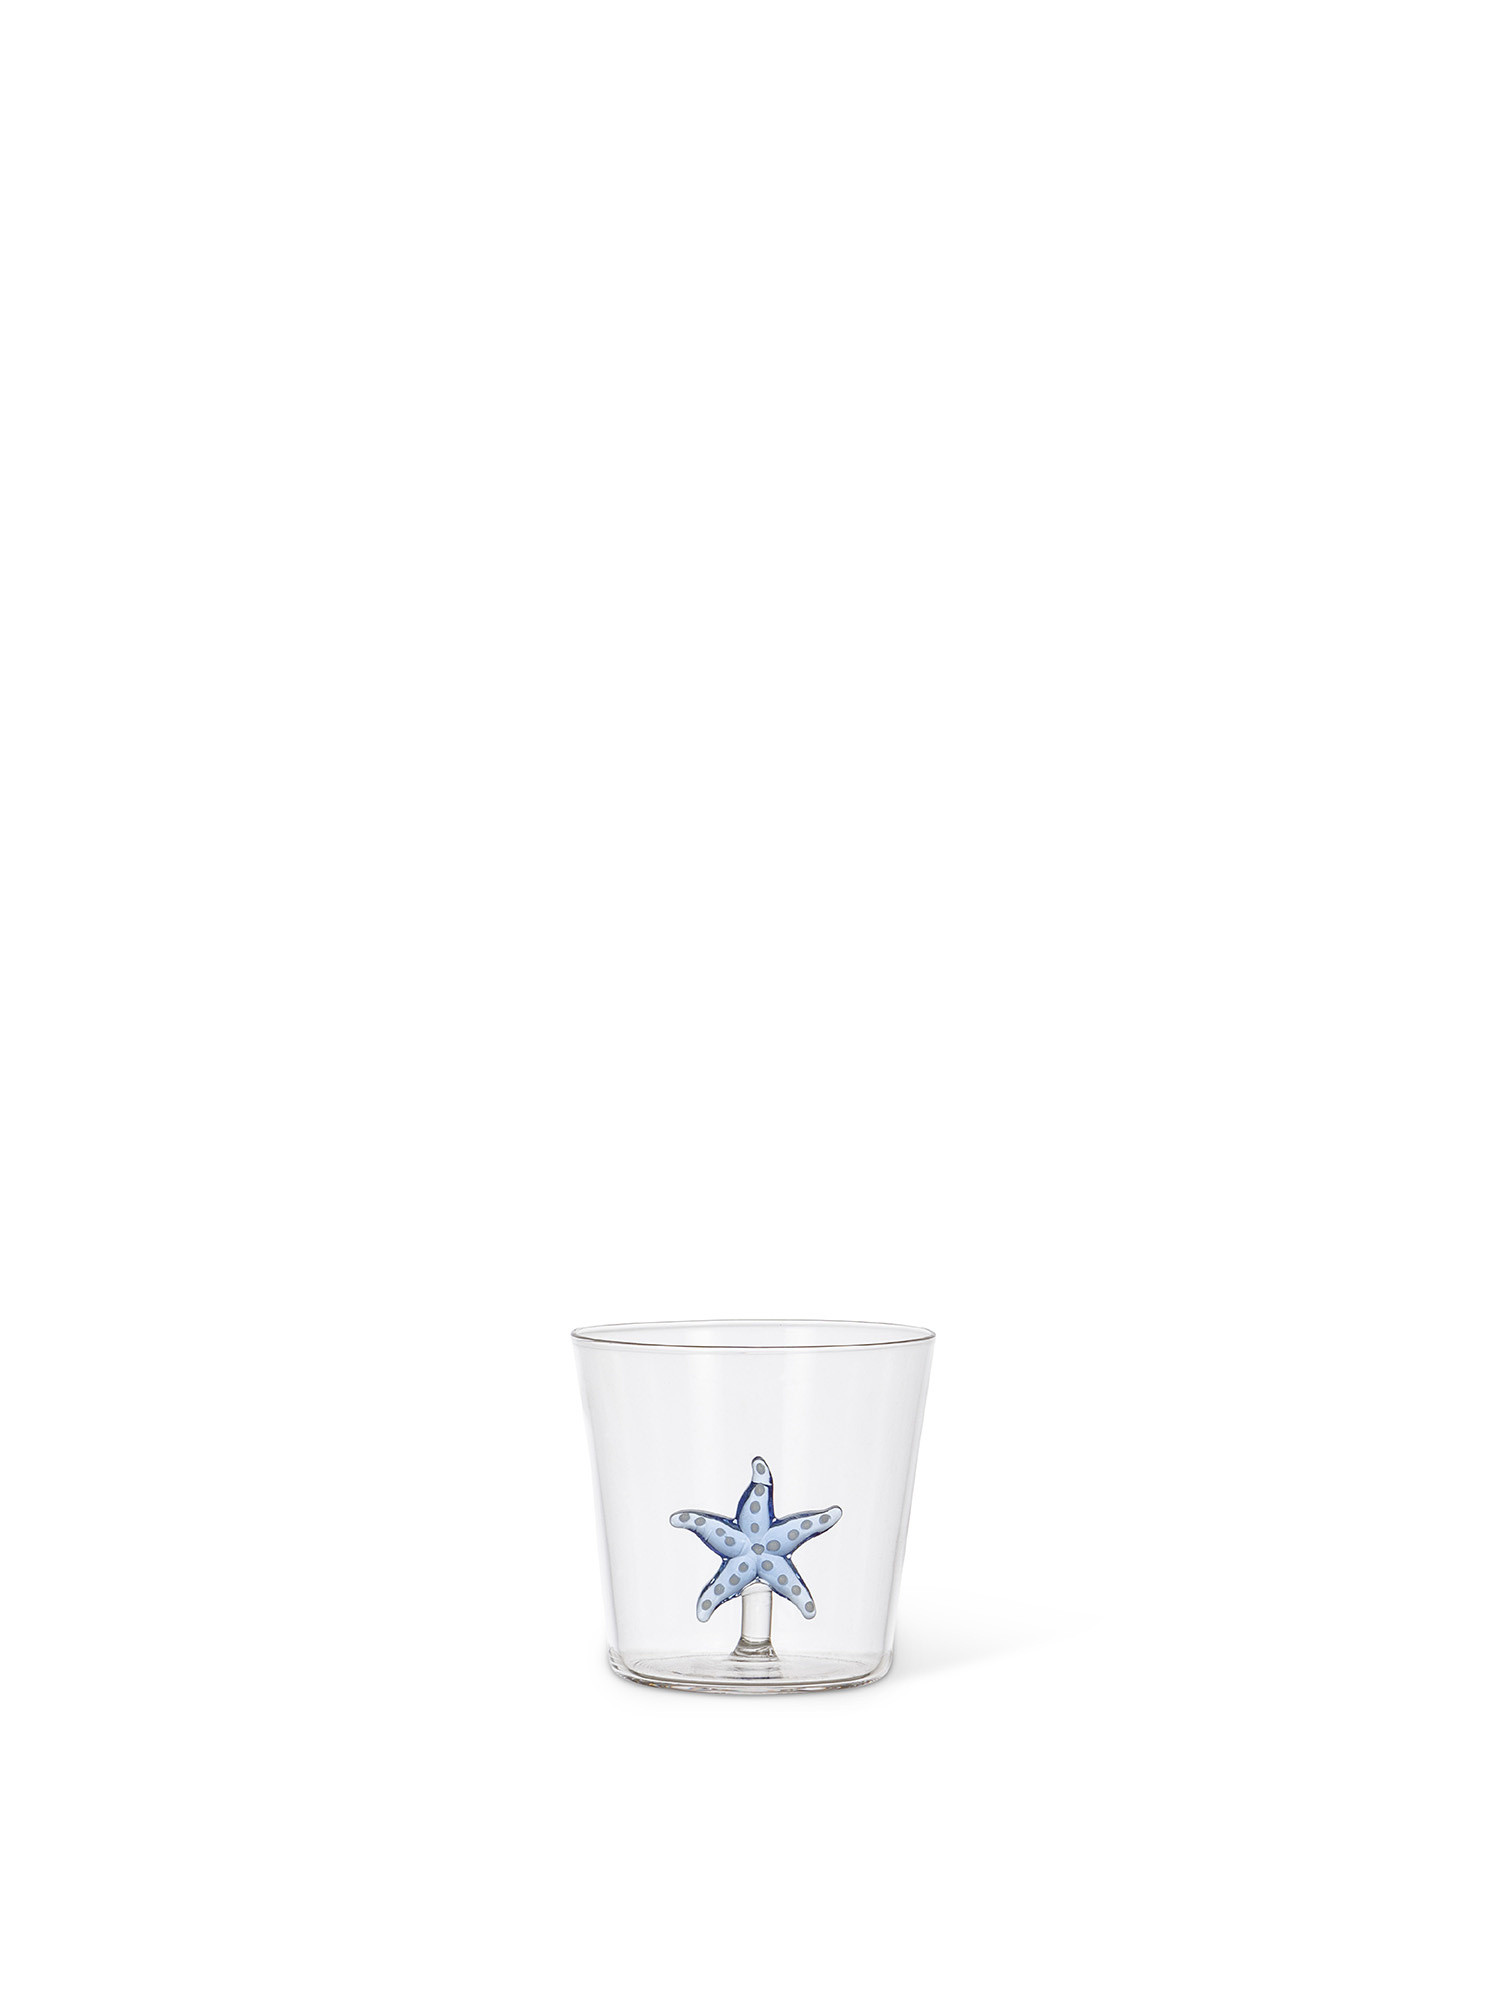 Bicchiere in vetro dettaglio stella marina, Trasparente, large image number 0